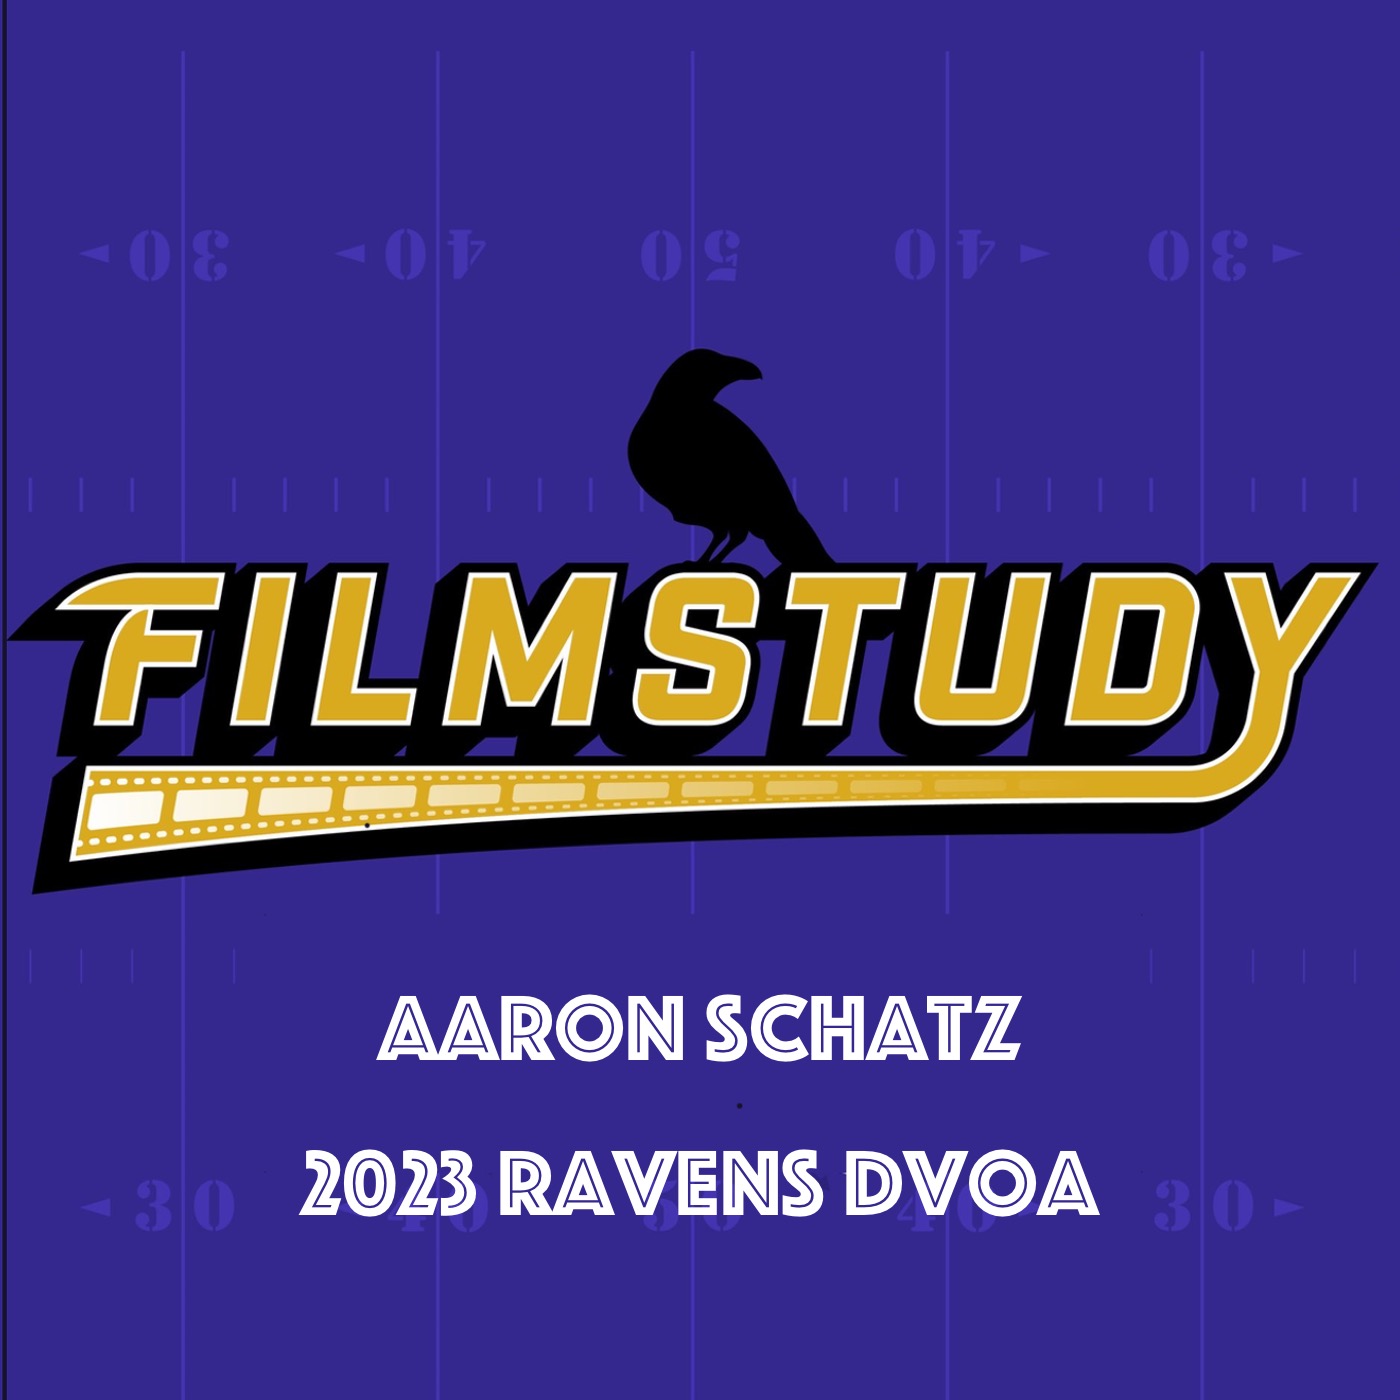 Aaron Schatz 2023 Ravens DVOA